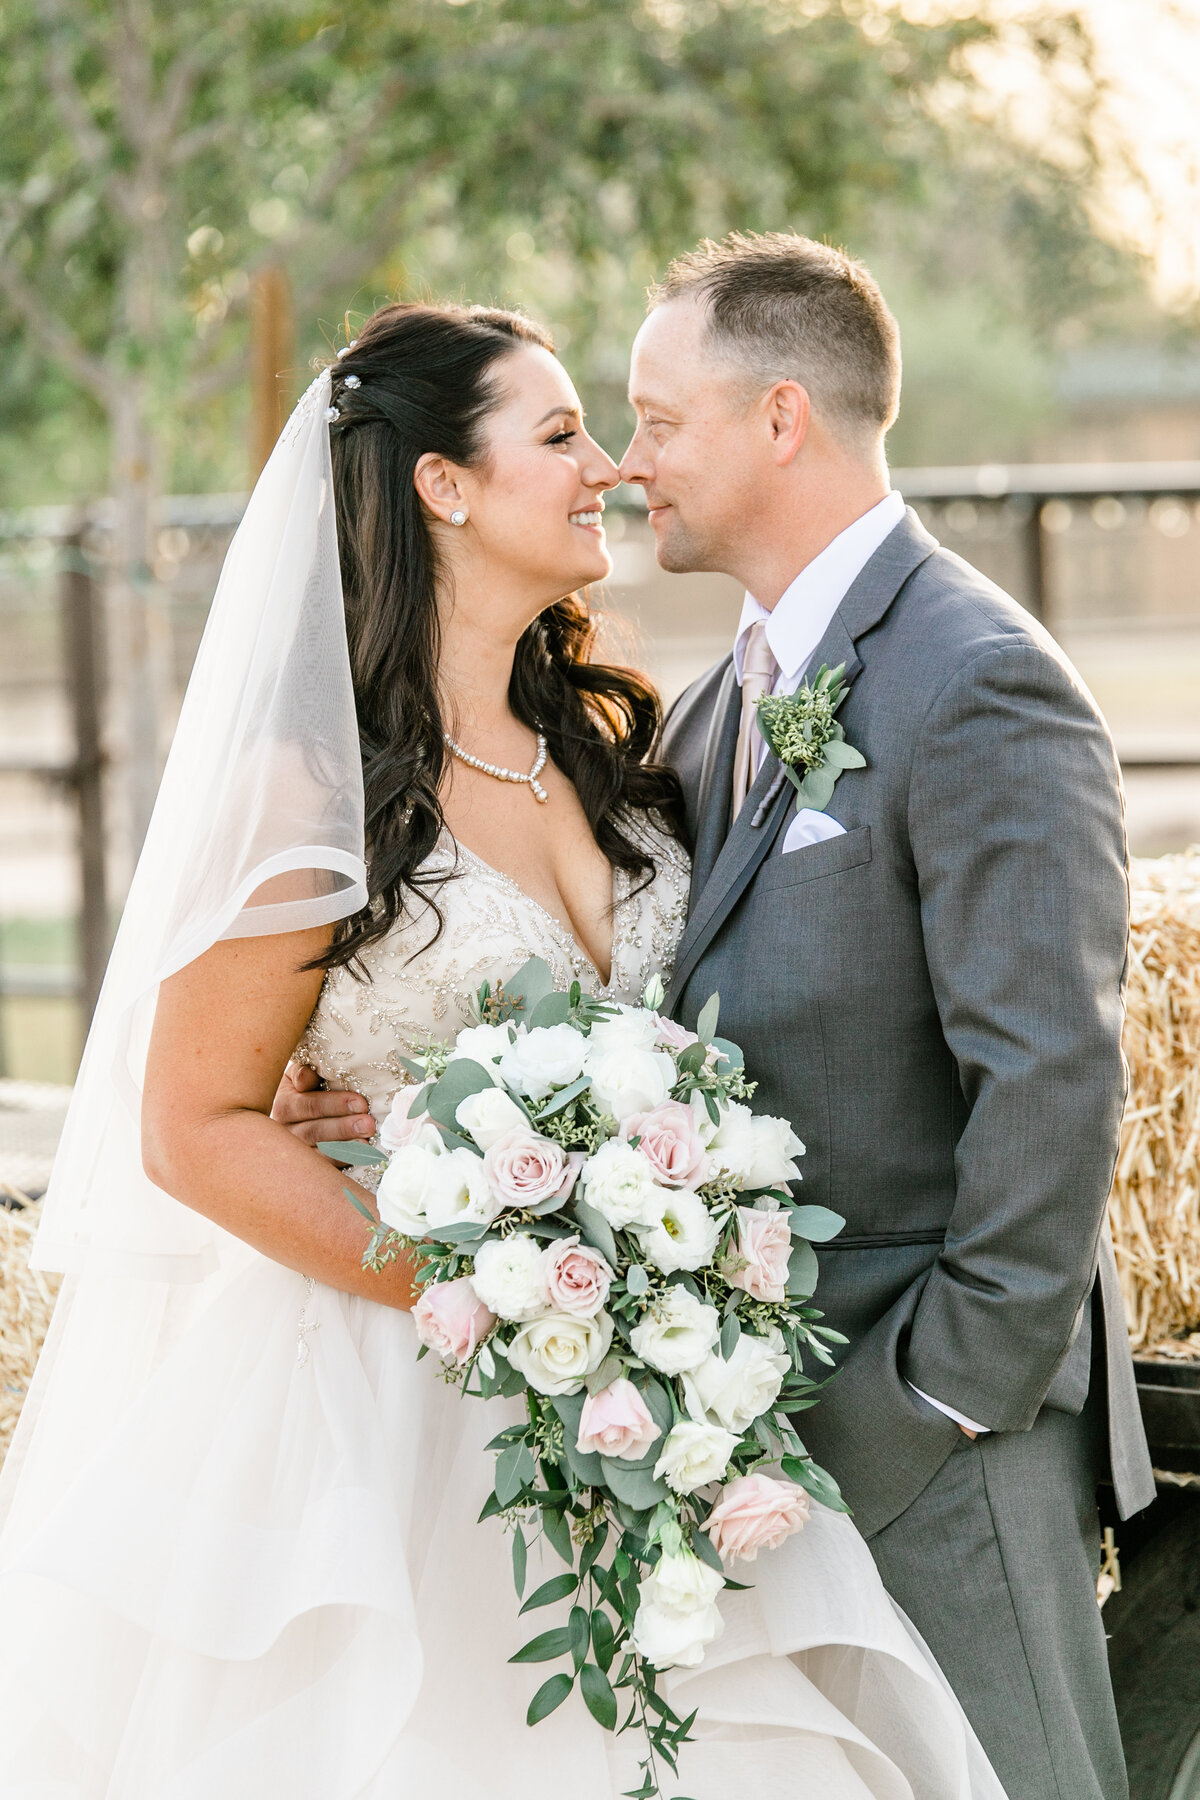 Karlie Colleen Photography - Glendale Arizona Backyard ranch wedding - Meghan & Ken-512